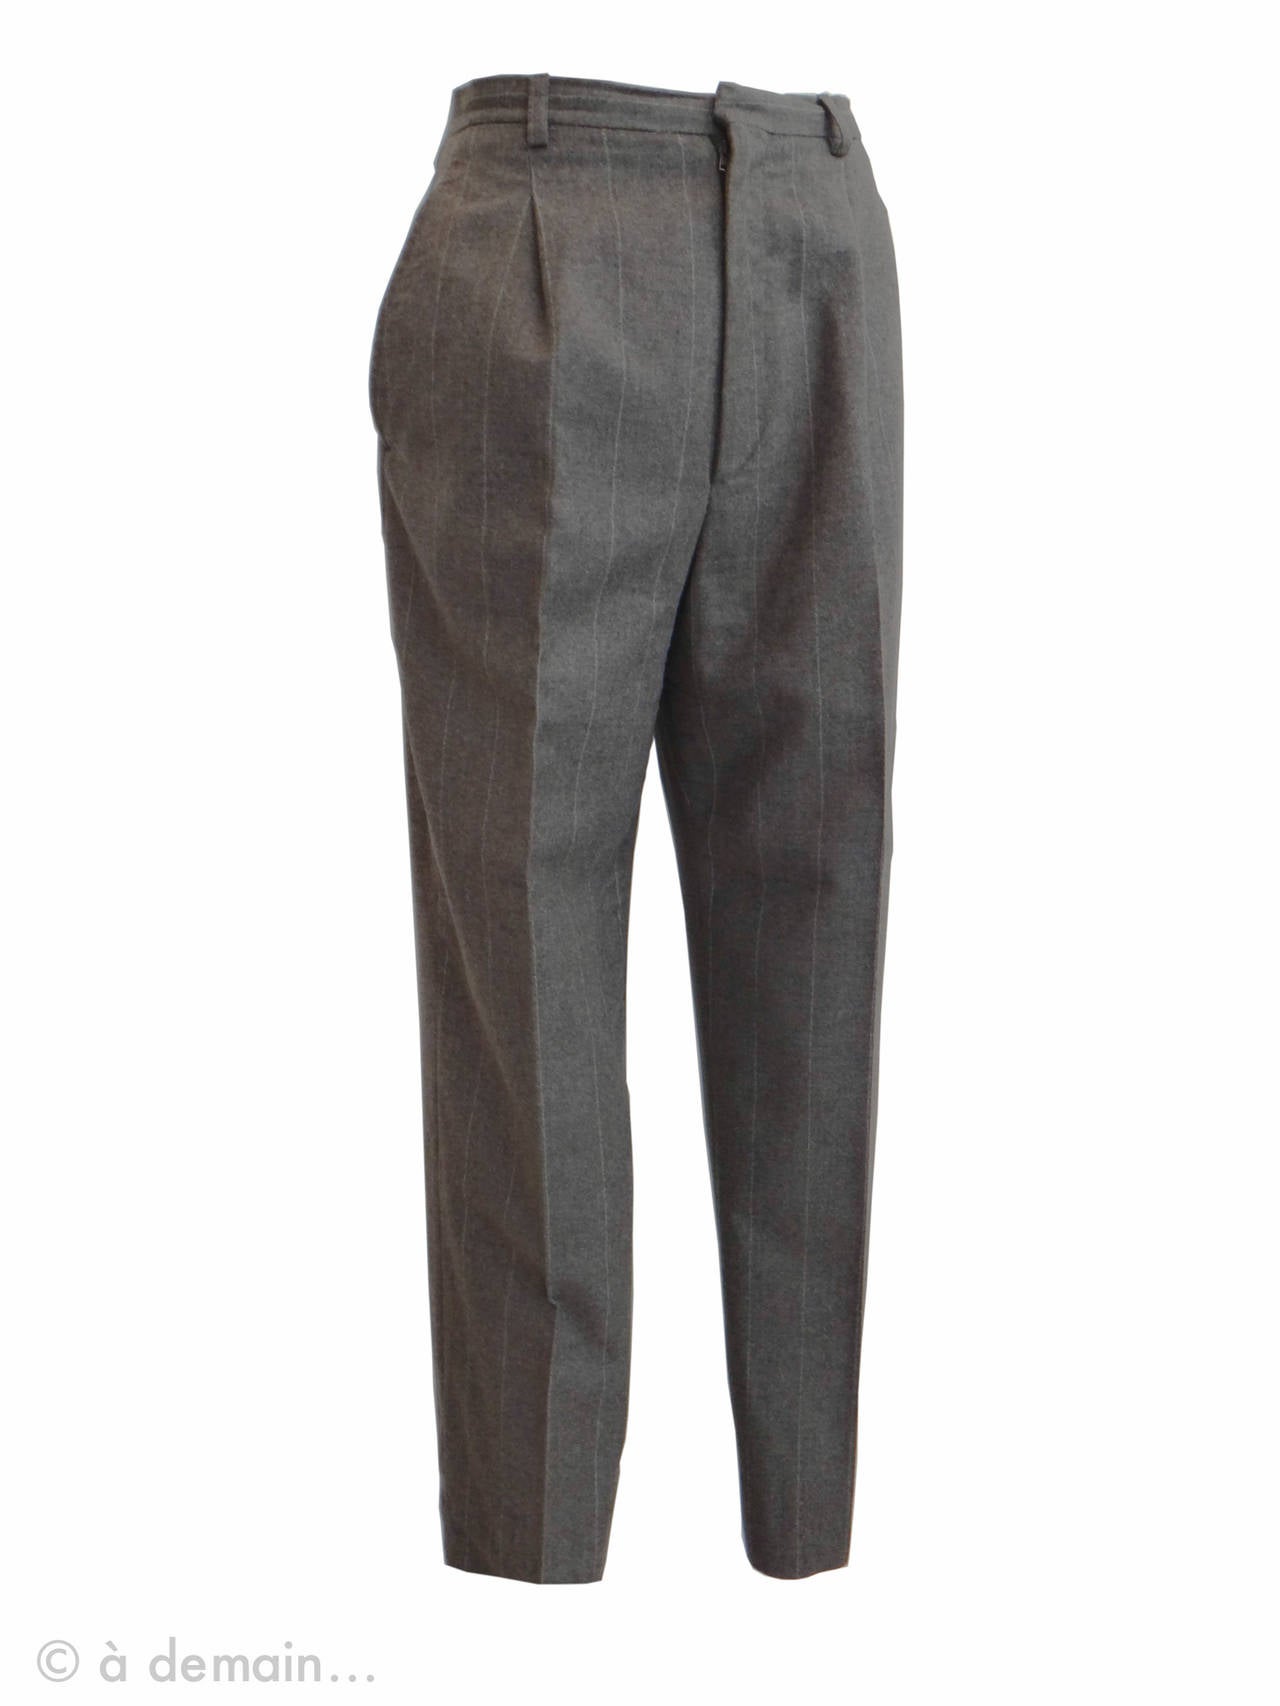 Striped Gray Trouser Suit by Yves Saint Laurent Rive Gauche, size 36 For Sale 1